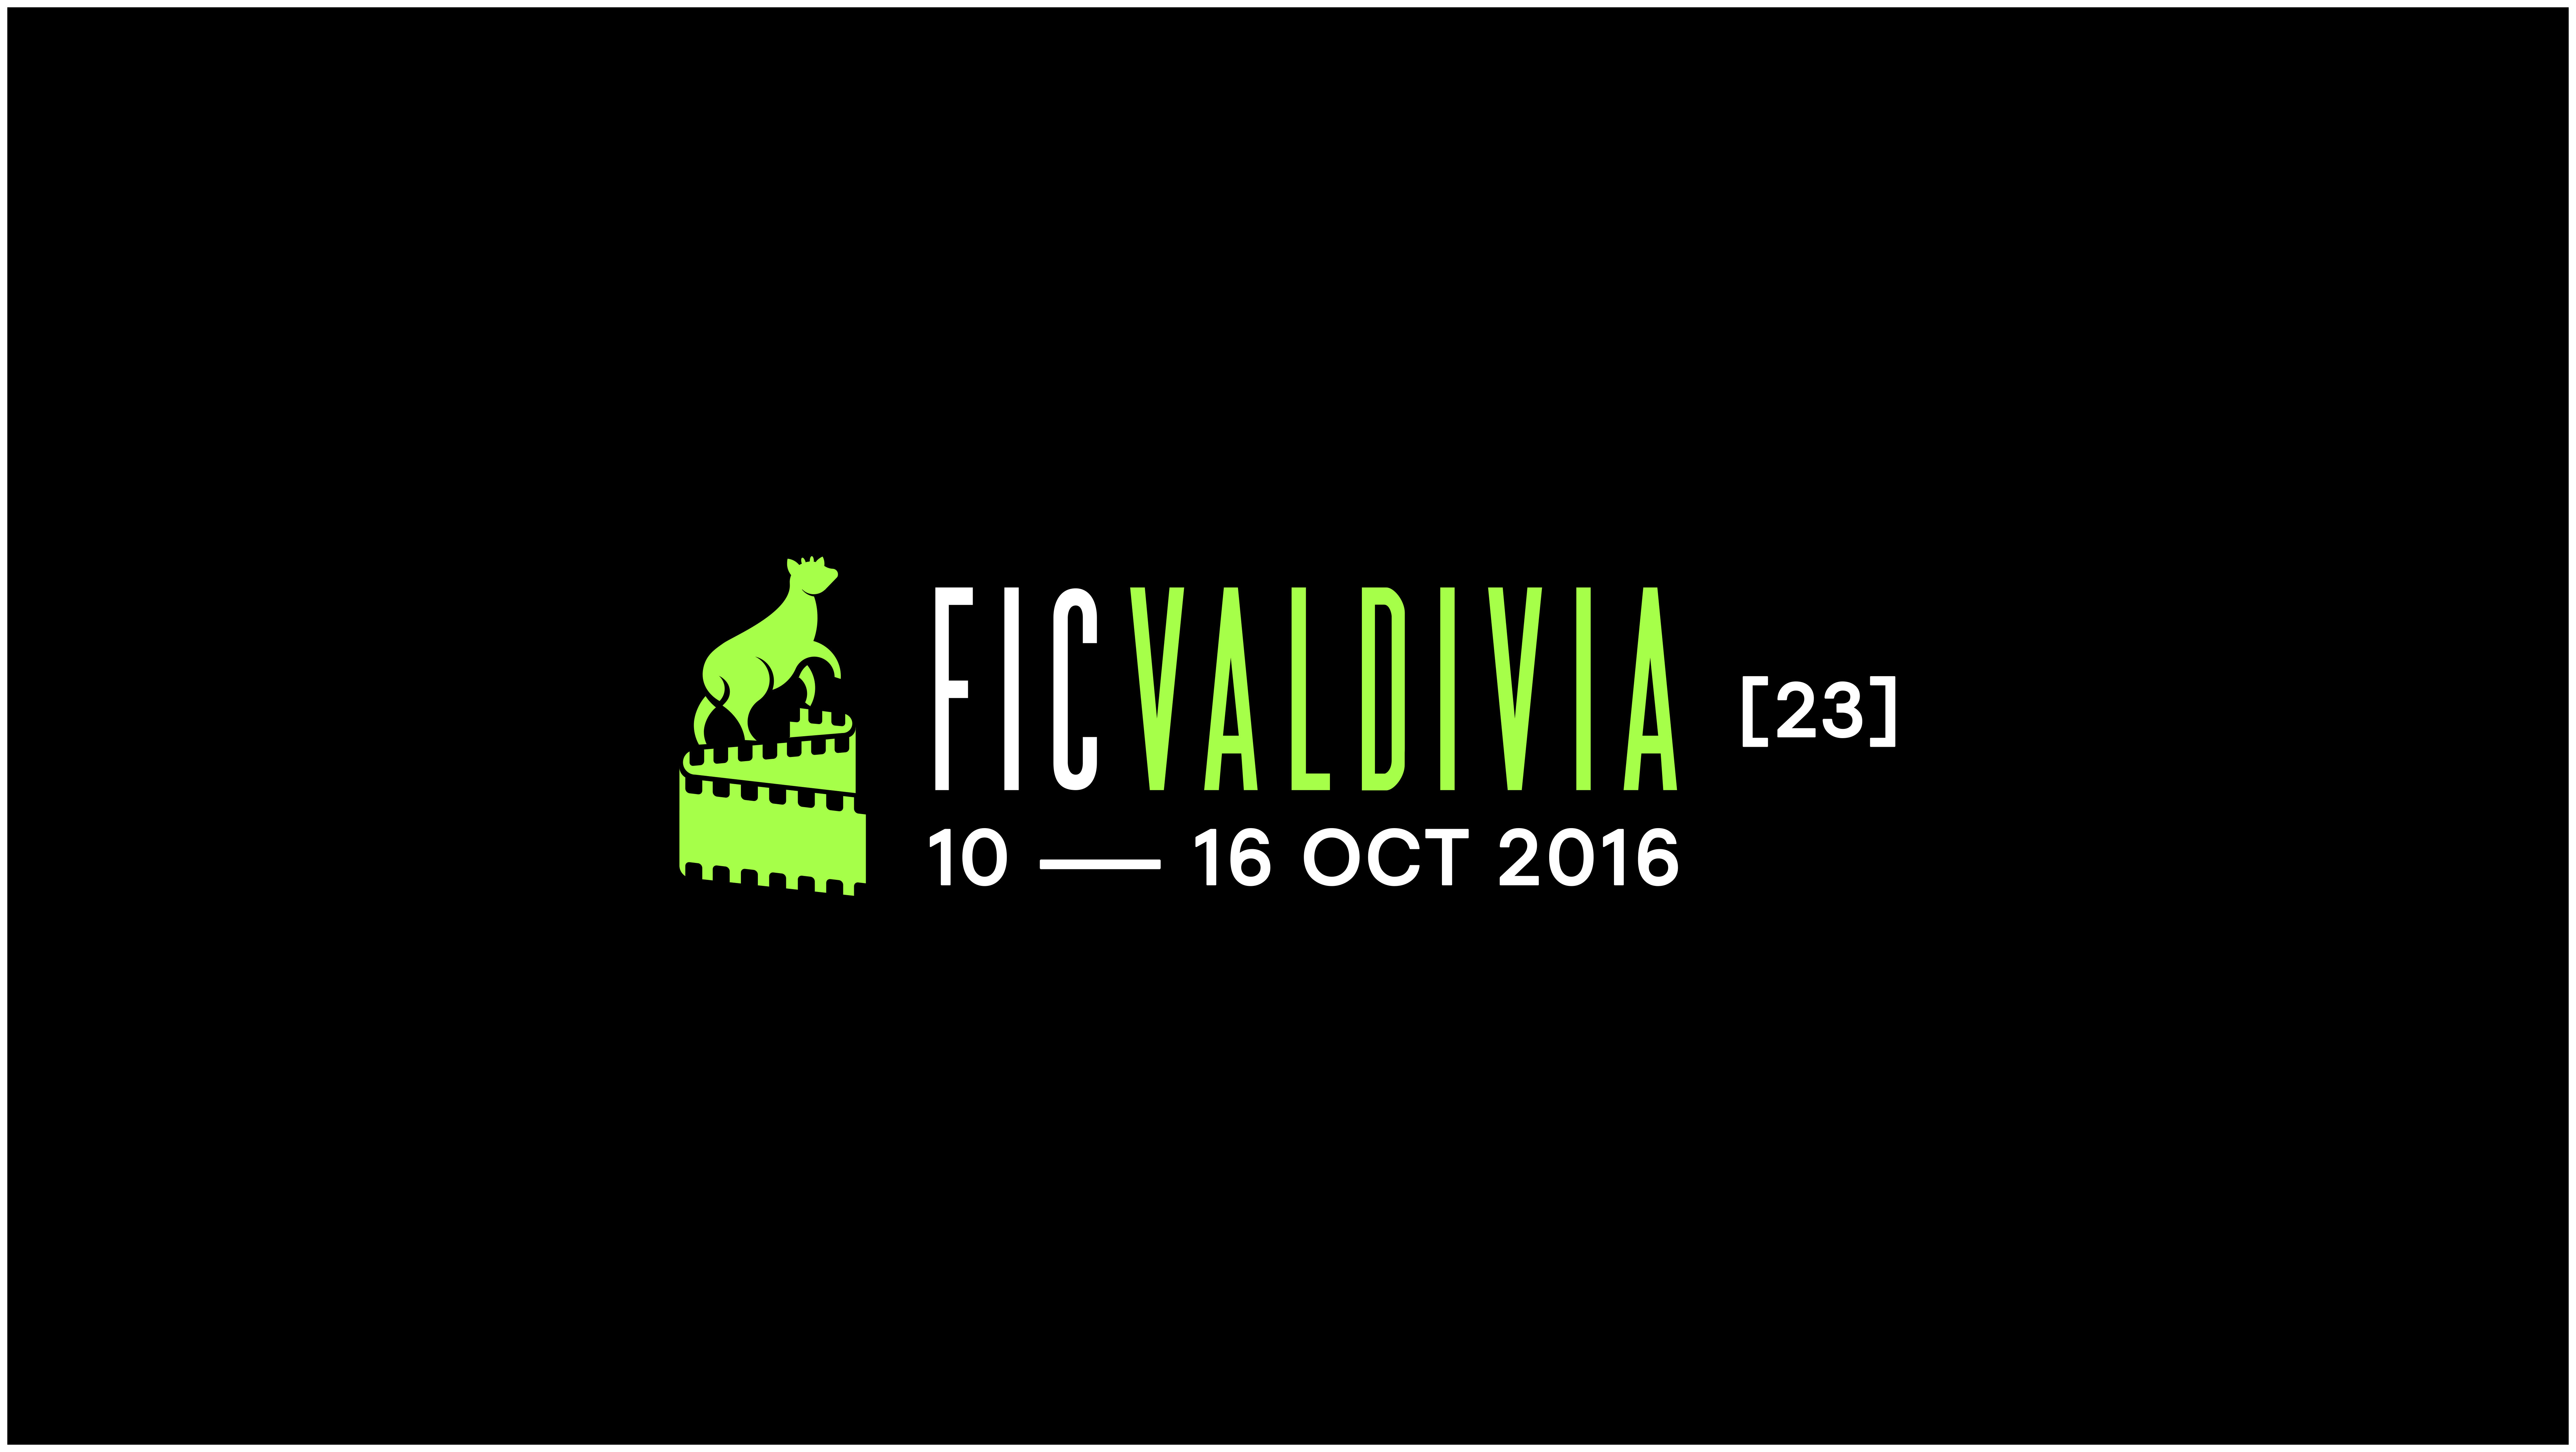 Concurso Spot publicitario 2016 FicValdivia